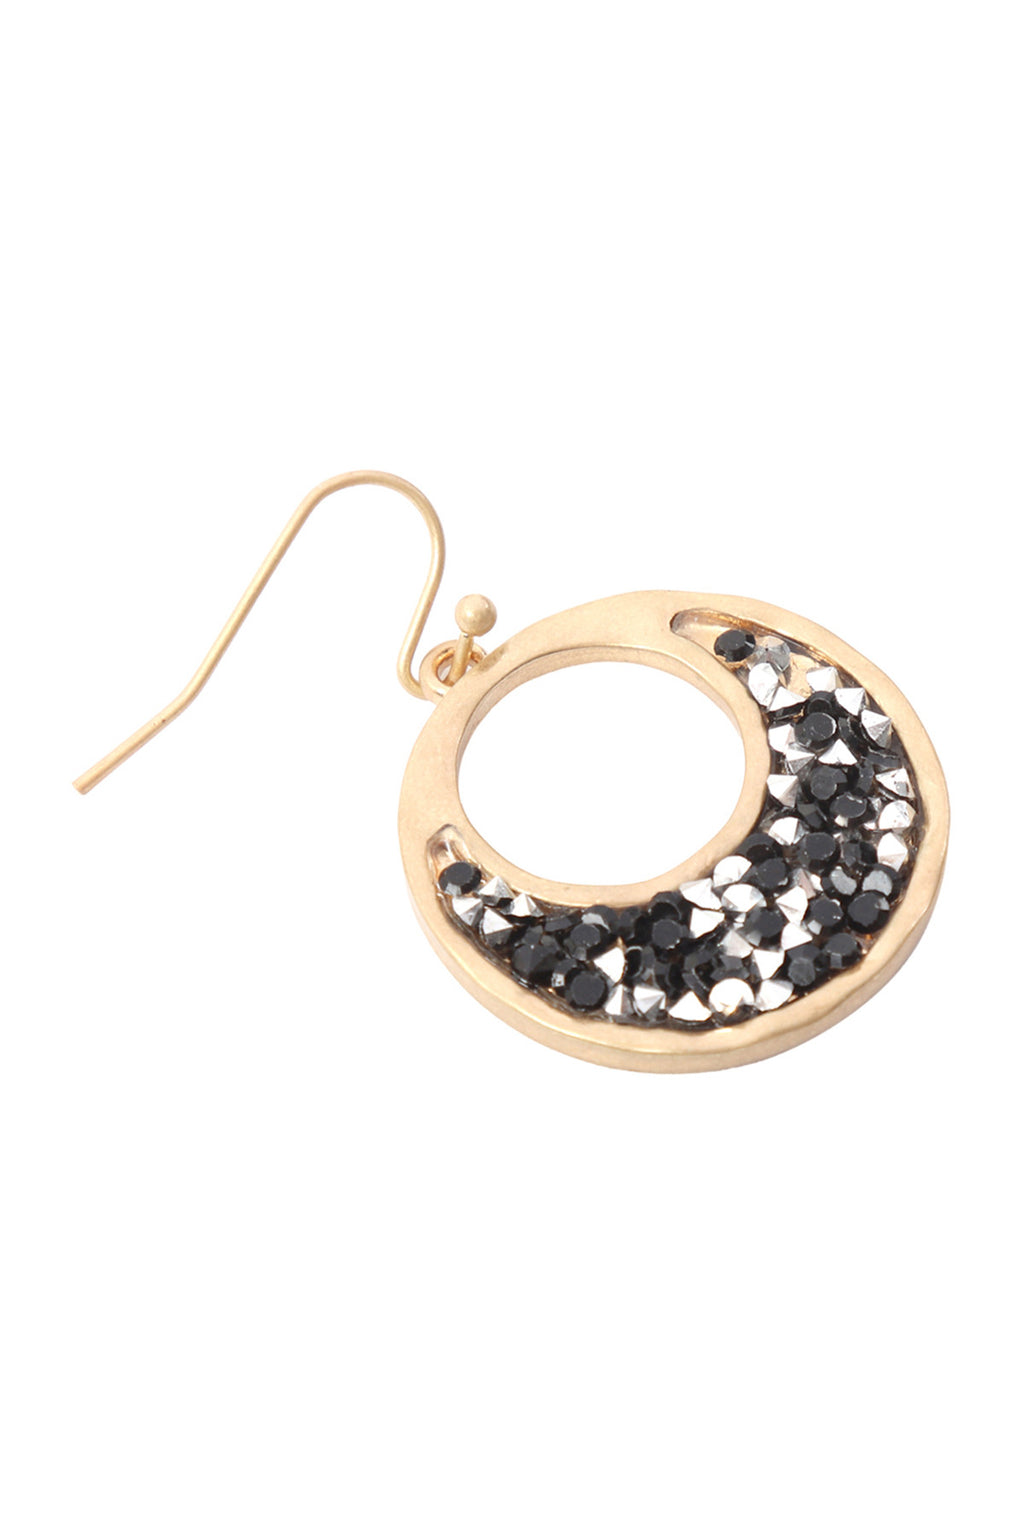 Matte Gold Black Open Round Glitter Faceted Dangle Hook Earrings - Pack of 6